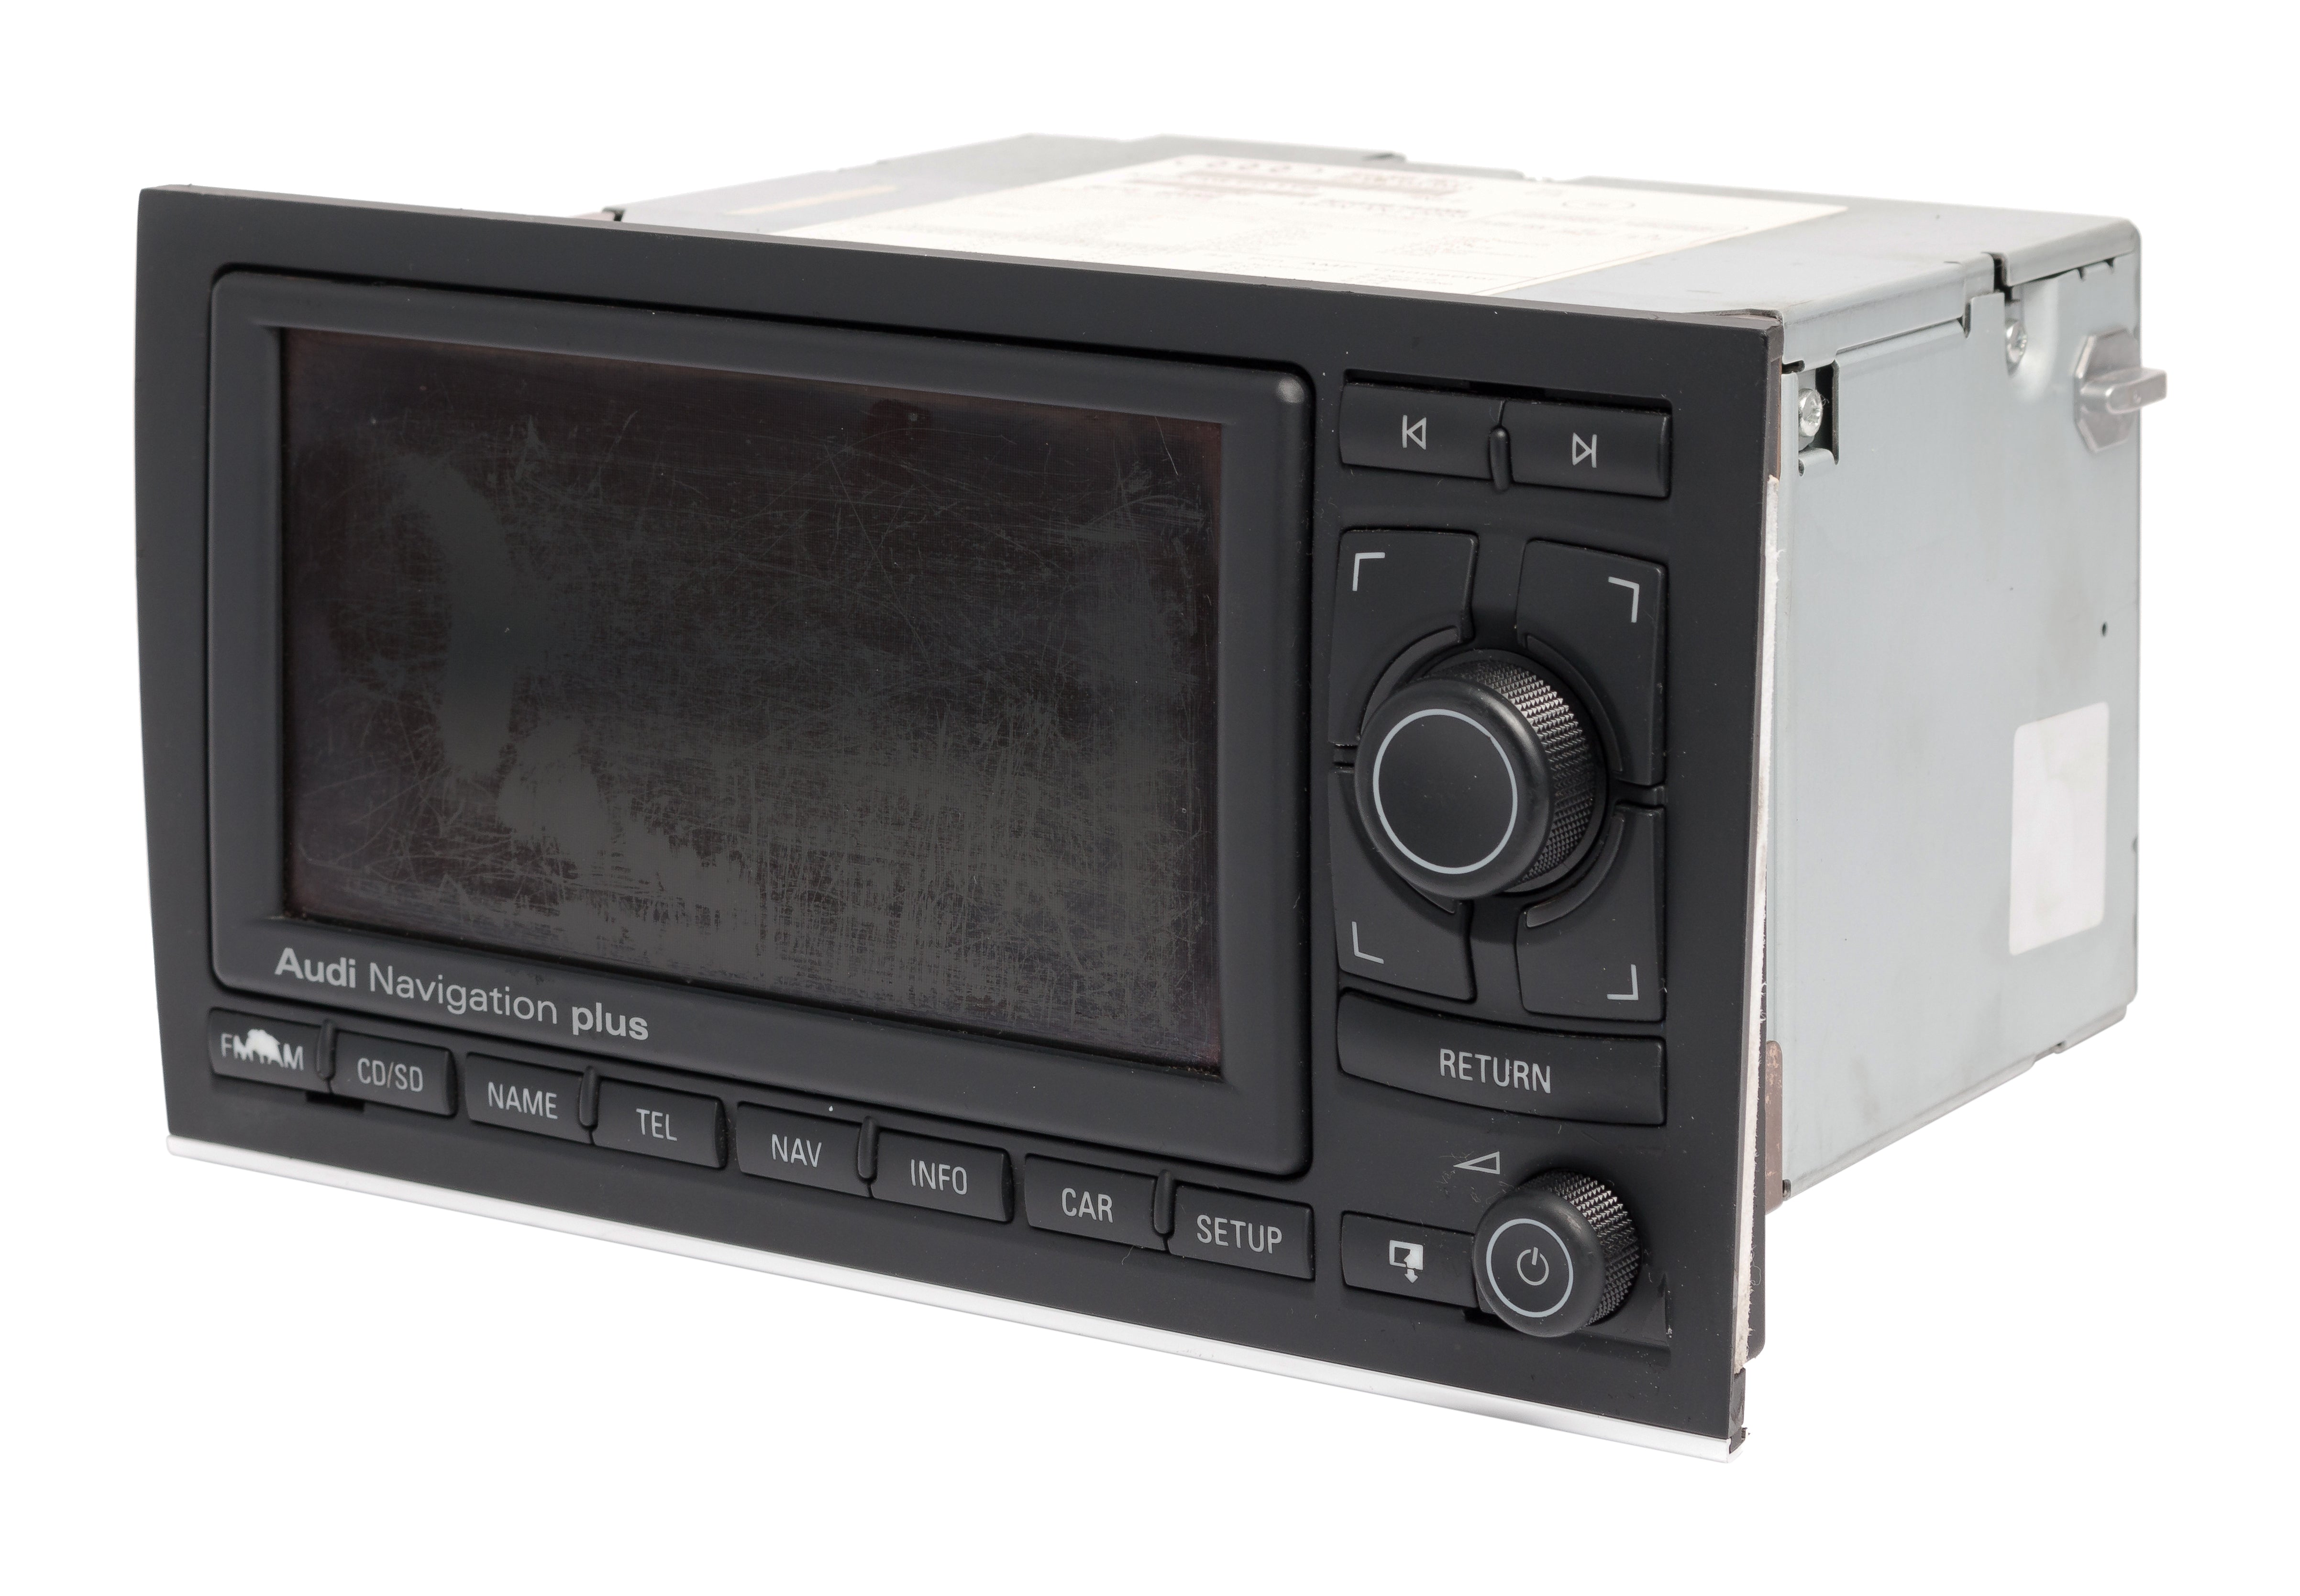 1factoryradio Radio Navigation 2006-2009 w CD Audi Screen Player Display S4 – AMFM A4